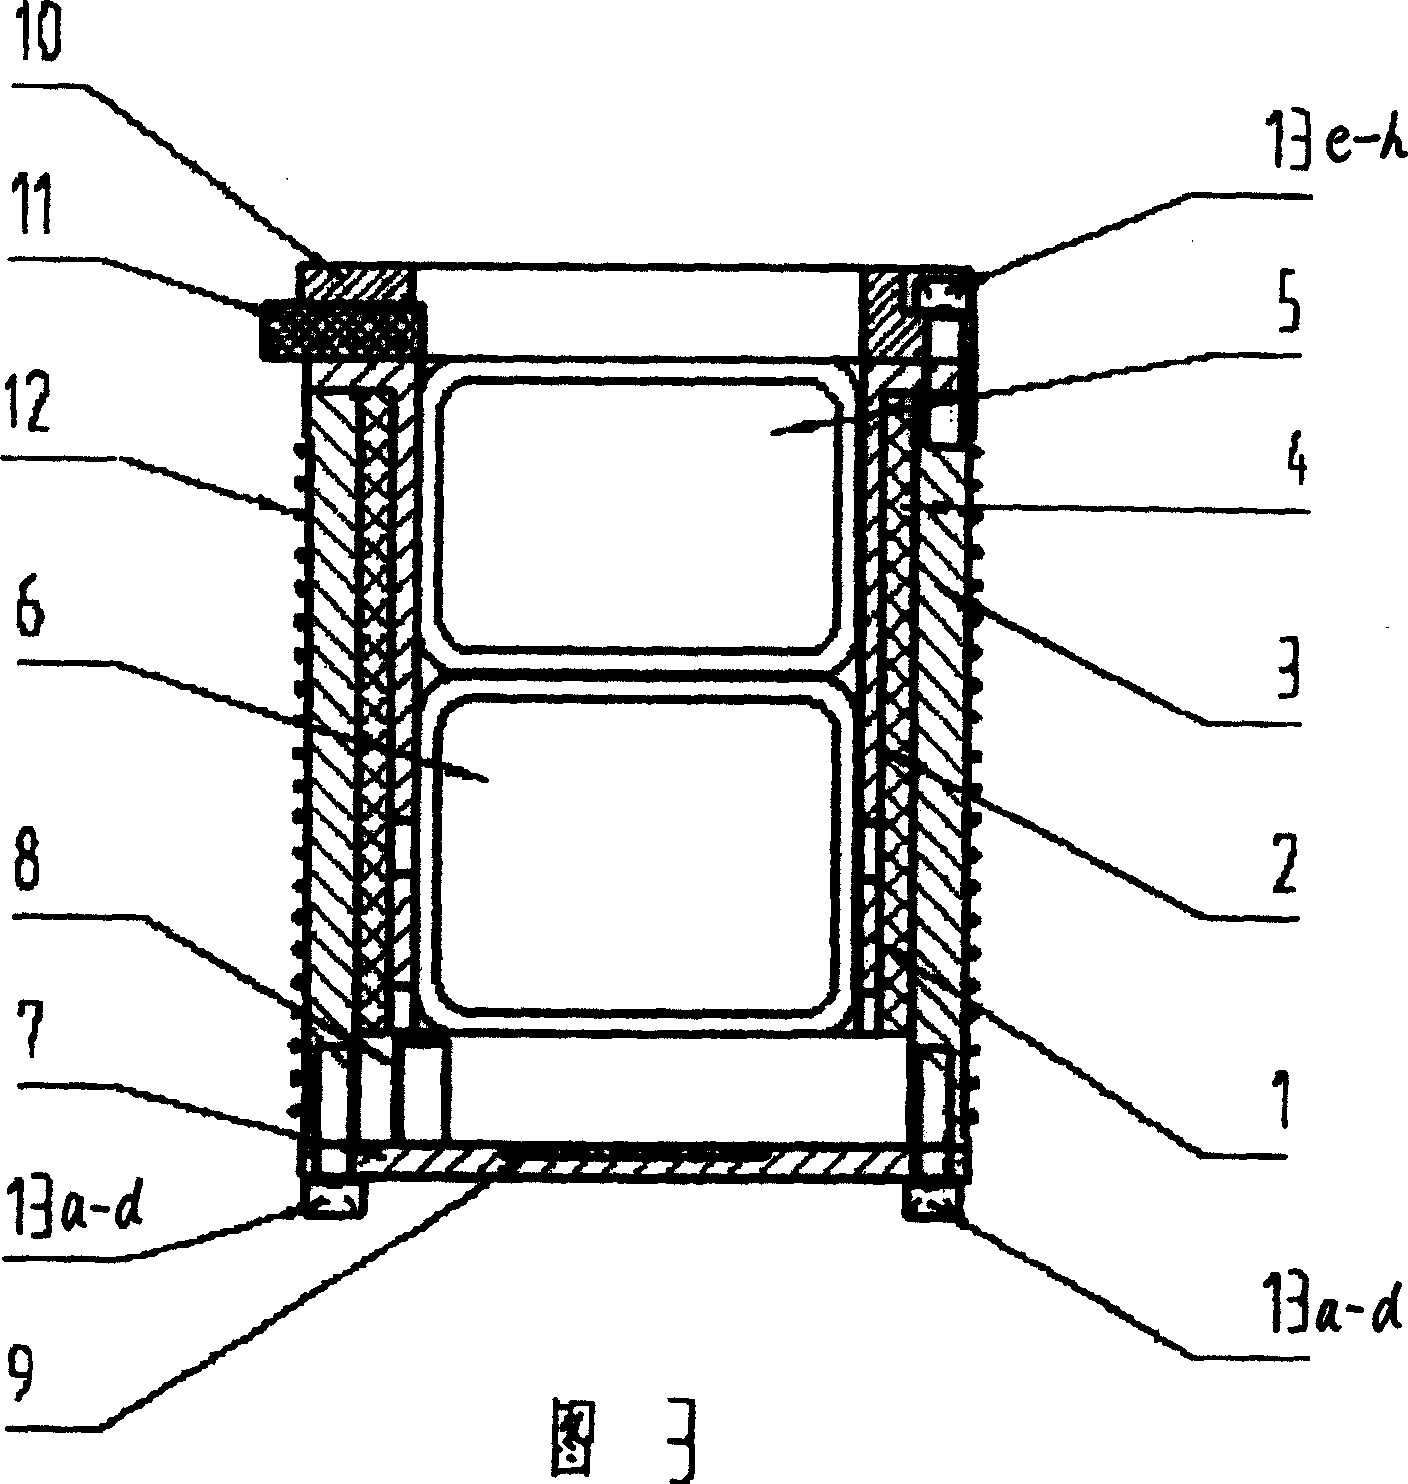 Rubidium atomic frequency standard microwave cavity resonator